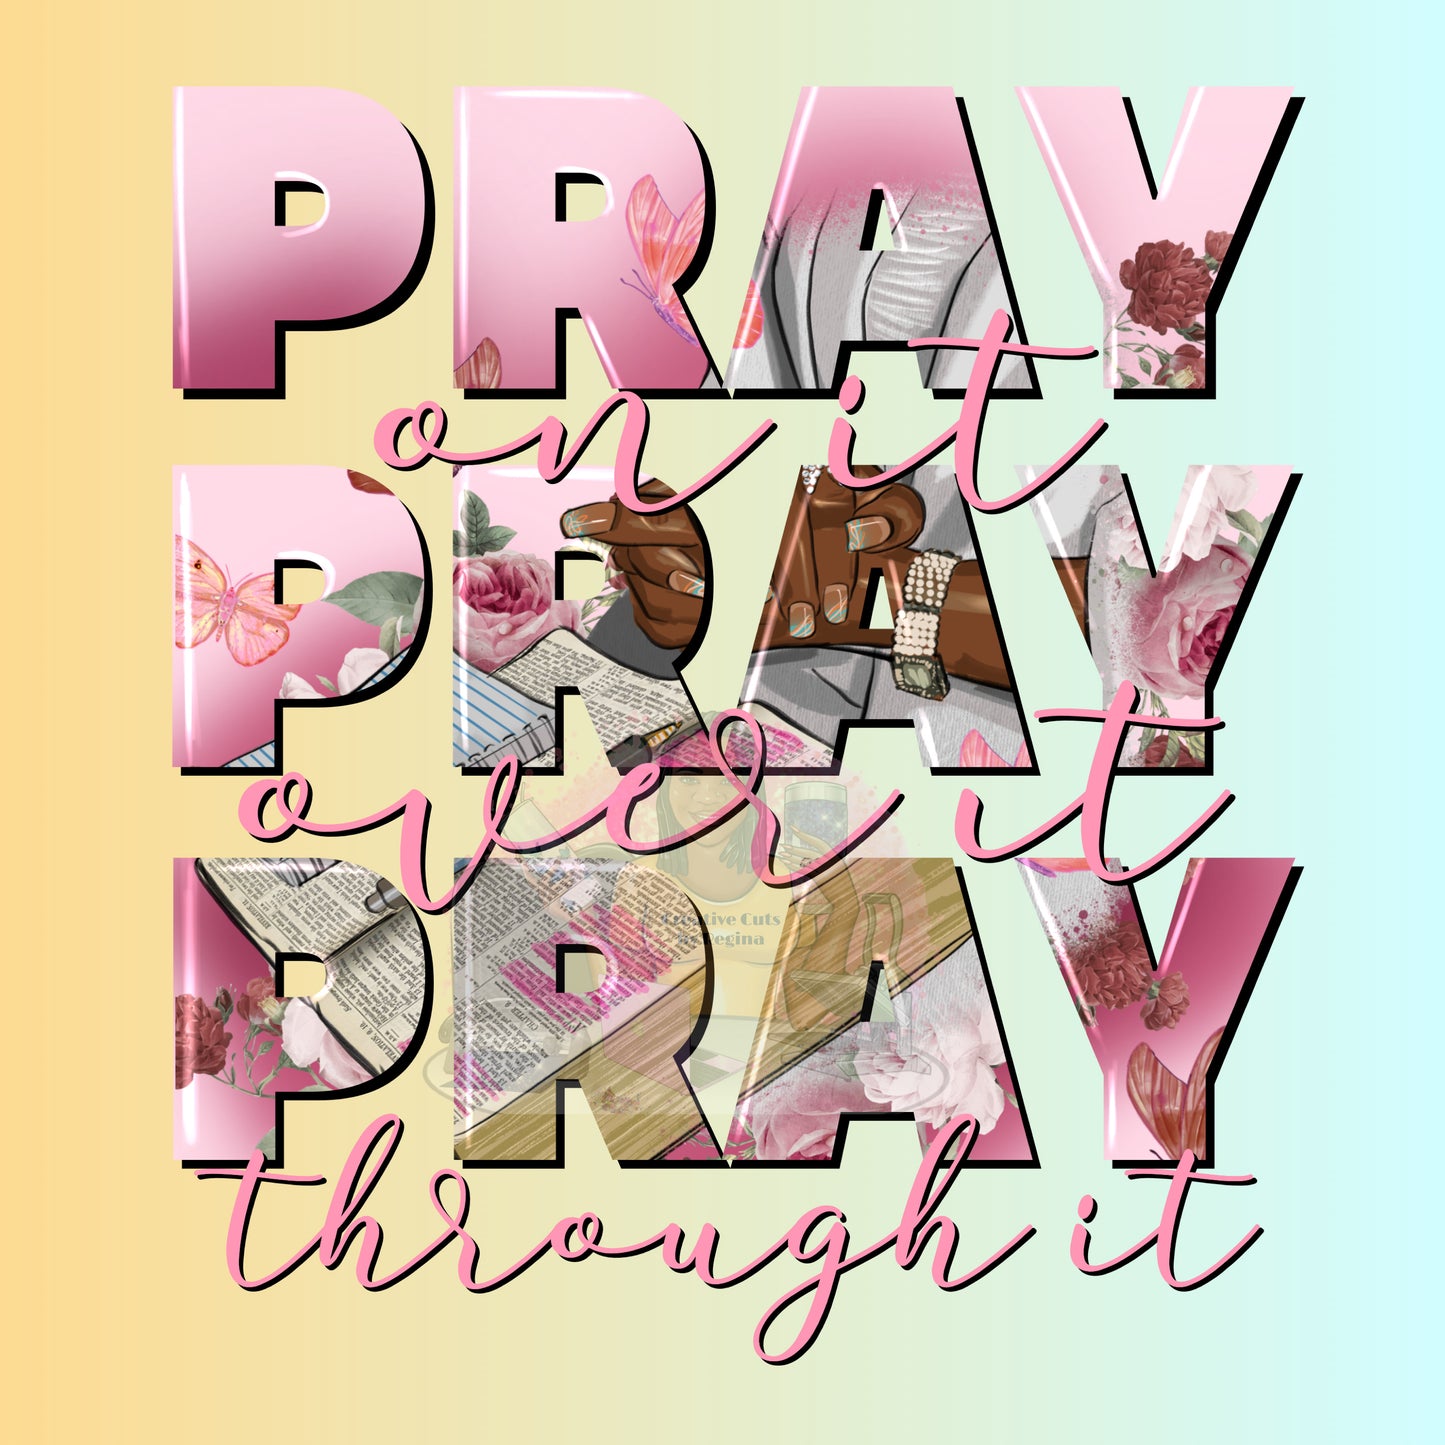 Pray On It